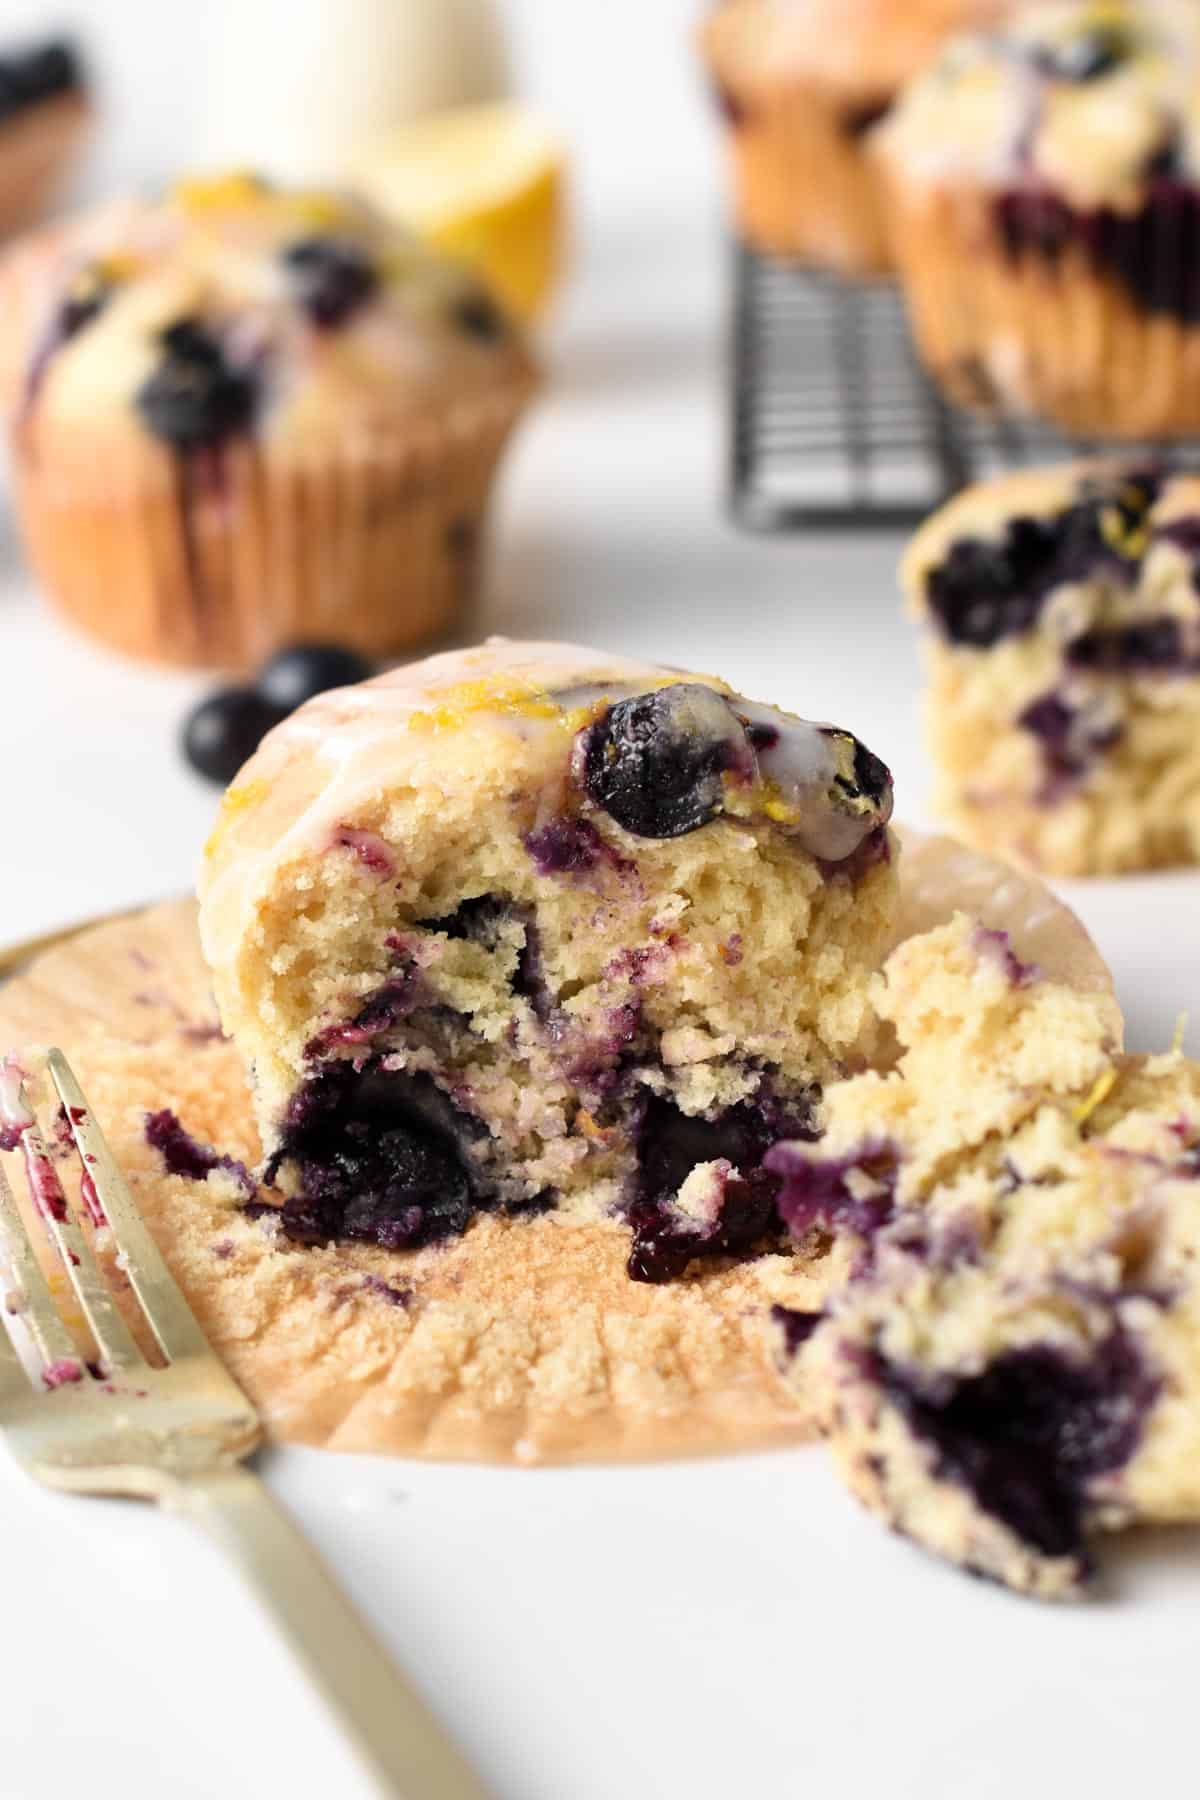 These vegan lemon blueberry muffins are tasty blueberry muffins filled with tangy lemon zest and juice.